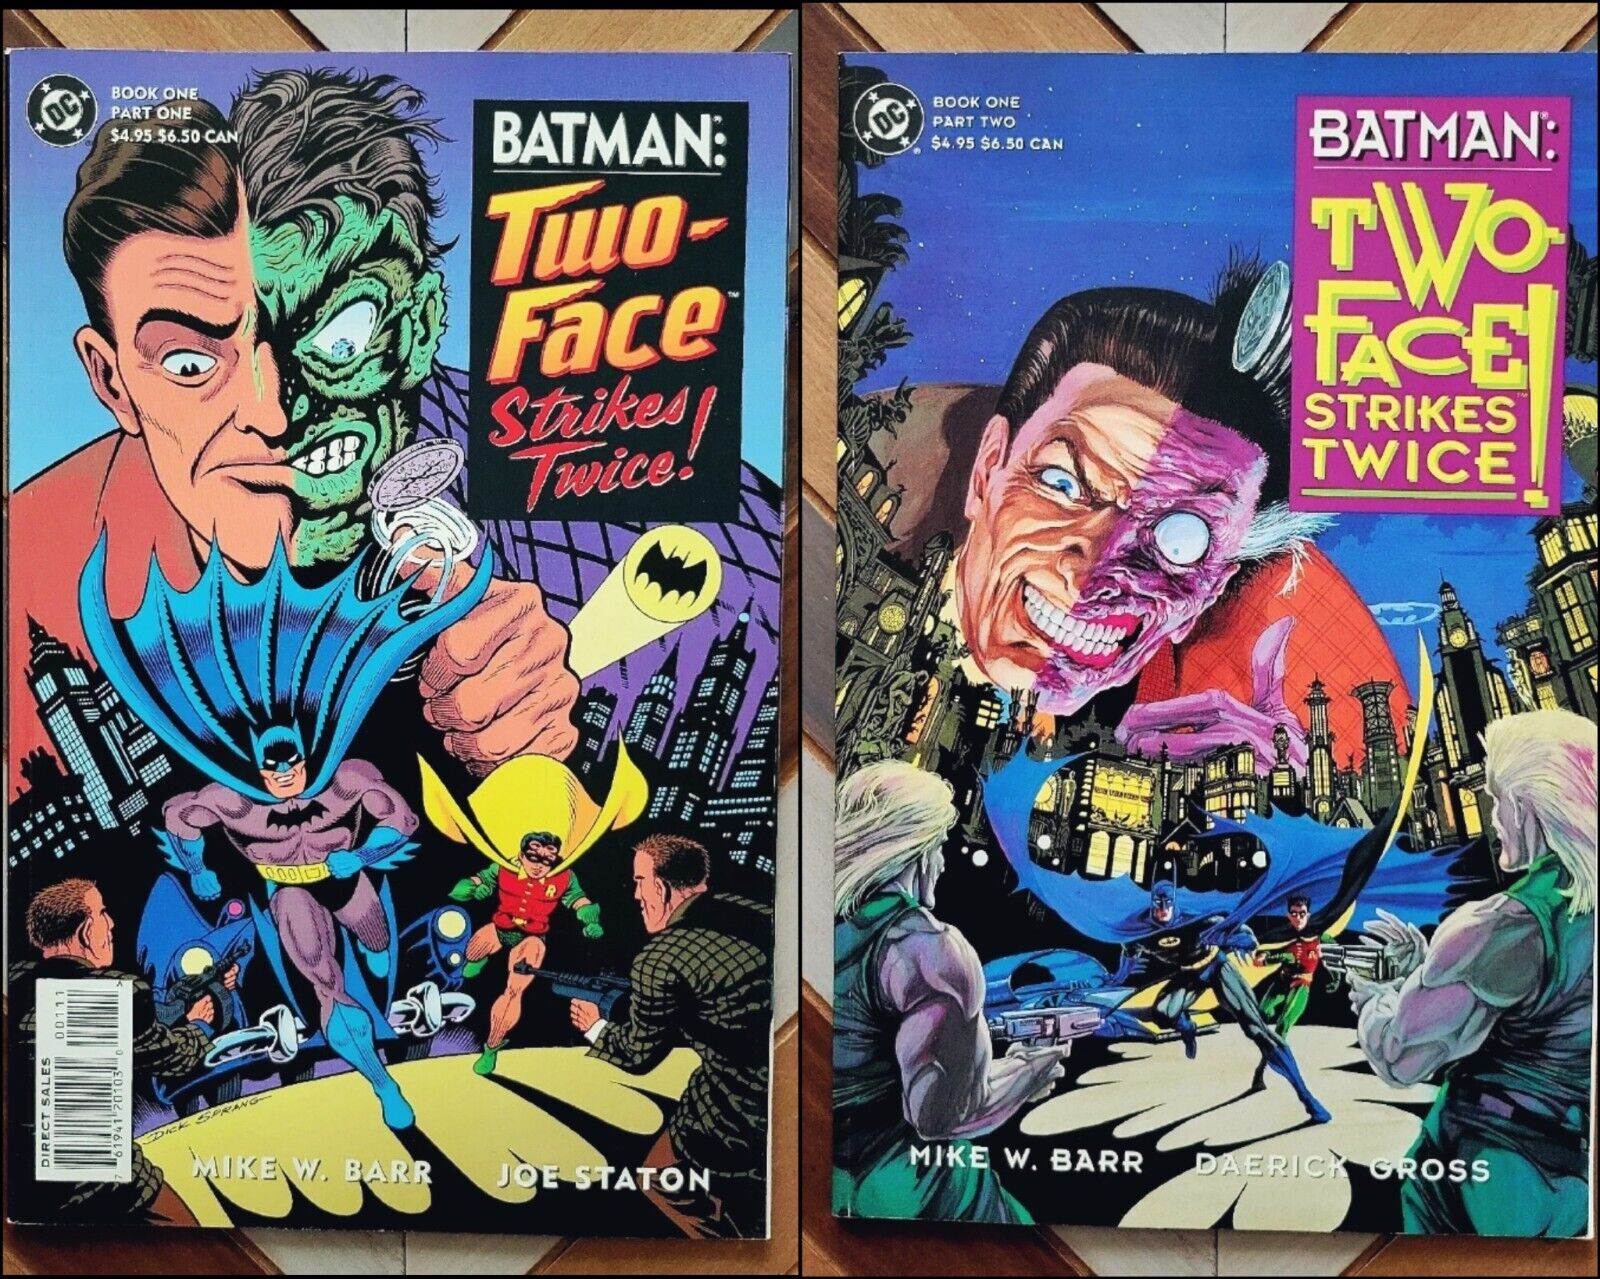 BATMAN: Two-Face Strikes Twice #1 NM- (DC 1993) Book 1 Pt 1-2 Dick Sprang Cover